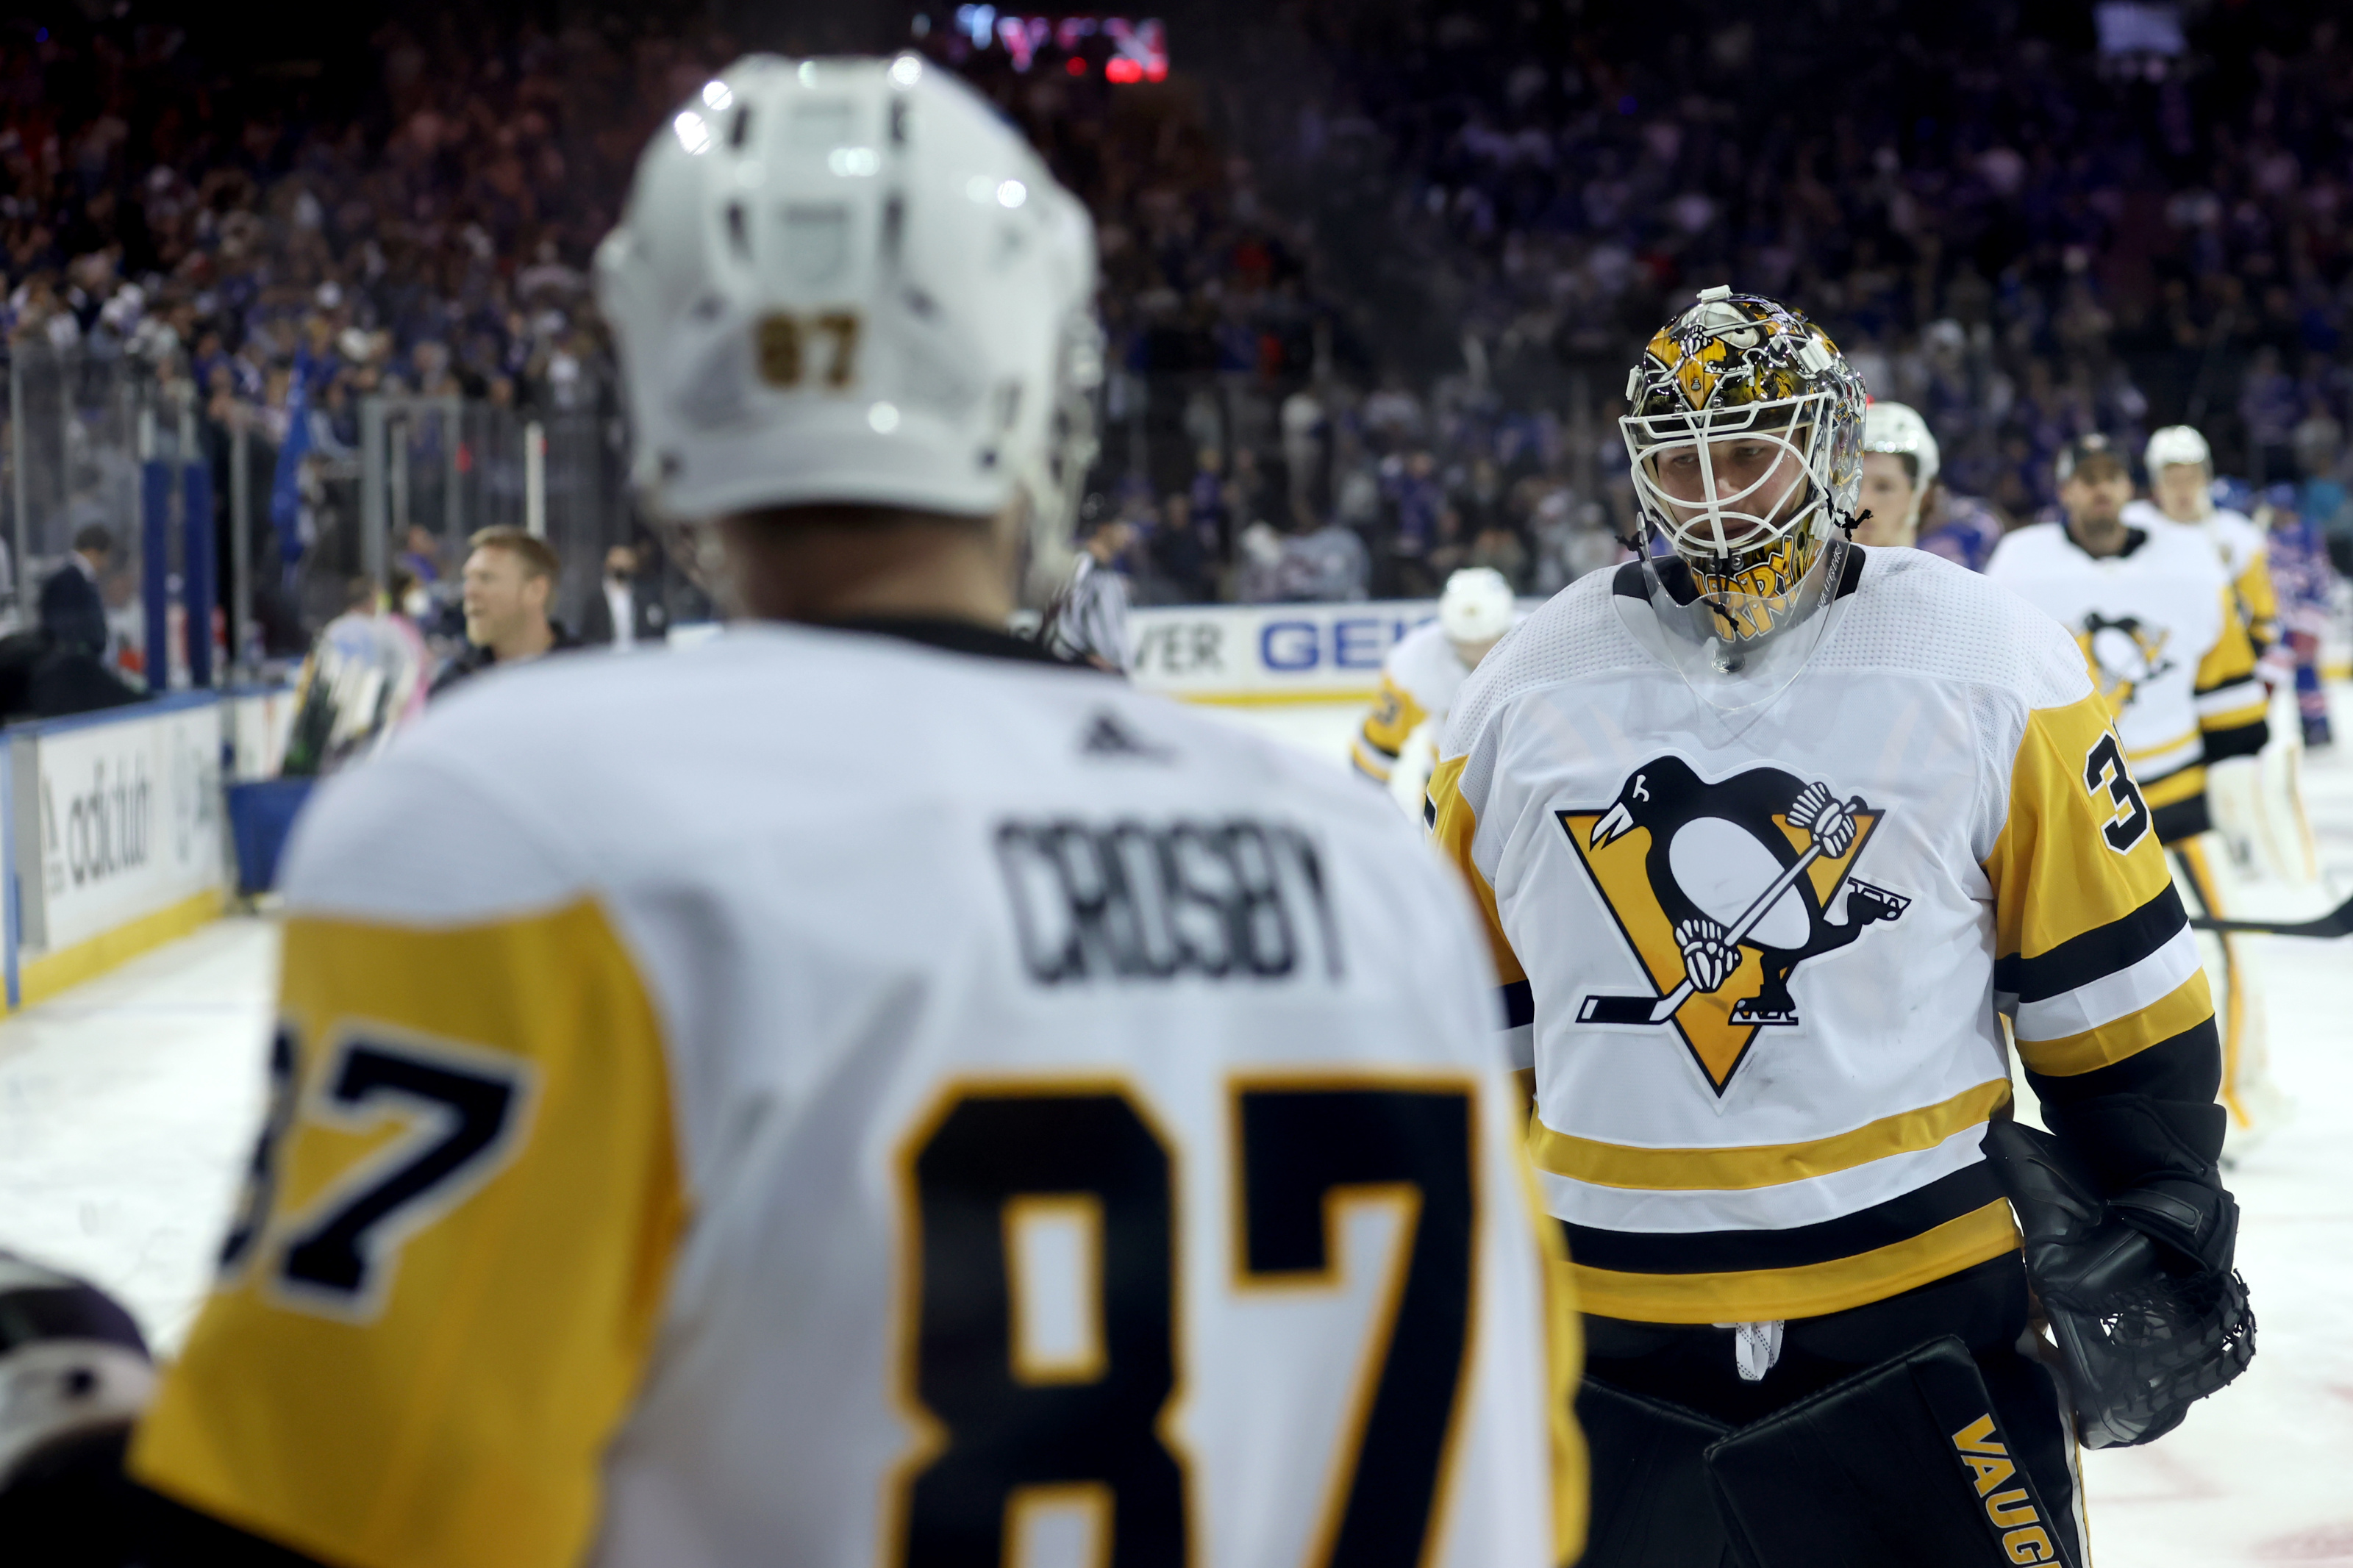 I'm here to win': Malkin, Letang return to Penguins